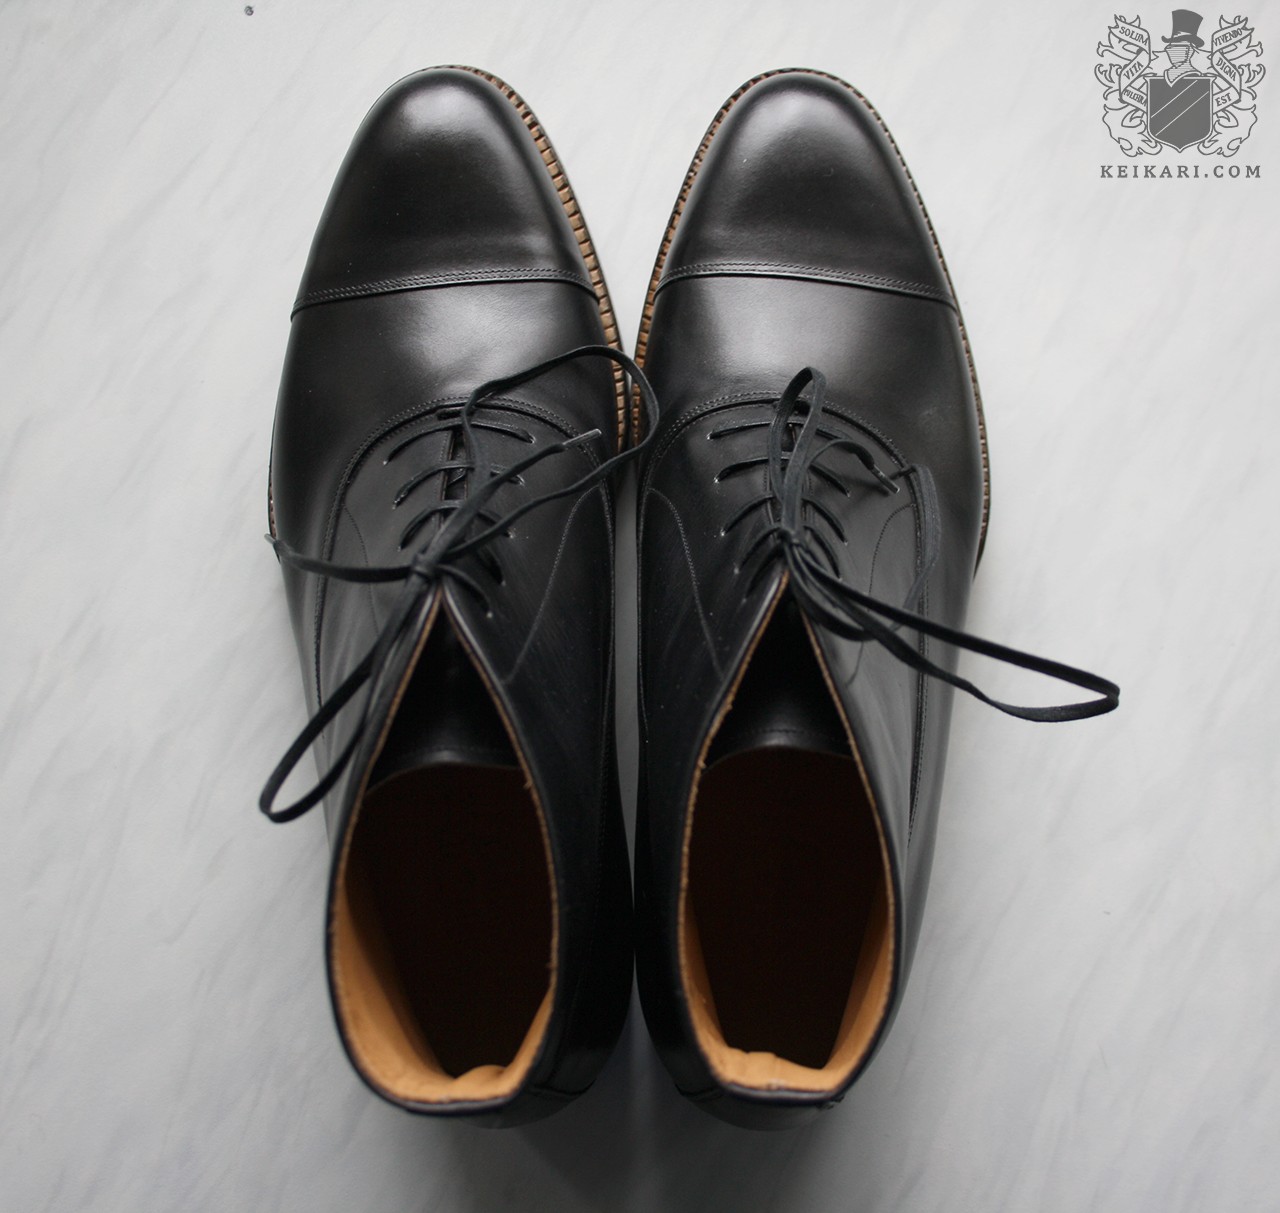 Made_to_order_shoes_from_Lászlò_Vass_at_Keikari_dot_com10